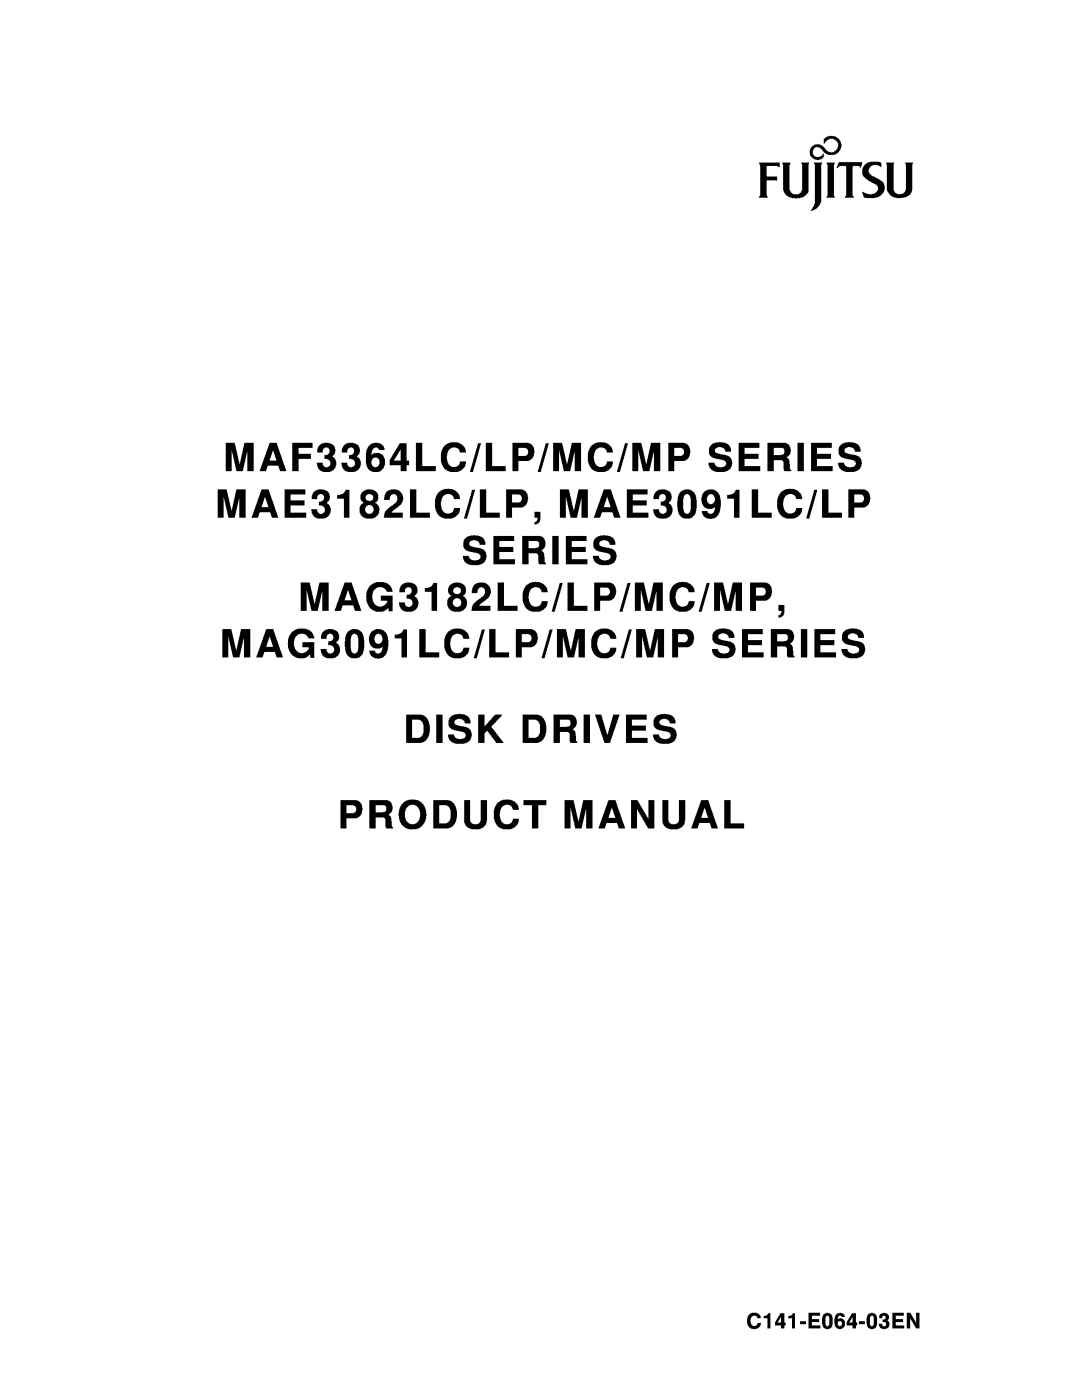 Fujitsu MAF3364LP manual C141-E064-03EN, MAF3364LC/LP/MC/MP SERIES MAE3182LC/LP, MAE3091LC/LP SERIES, Product Manual 